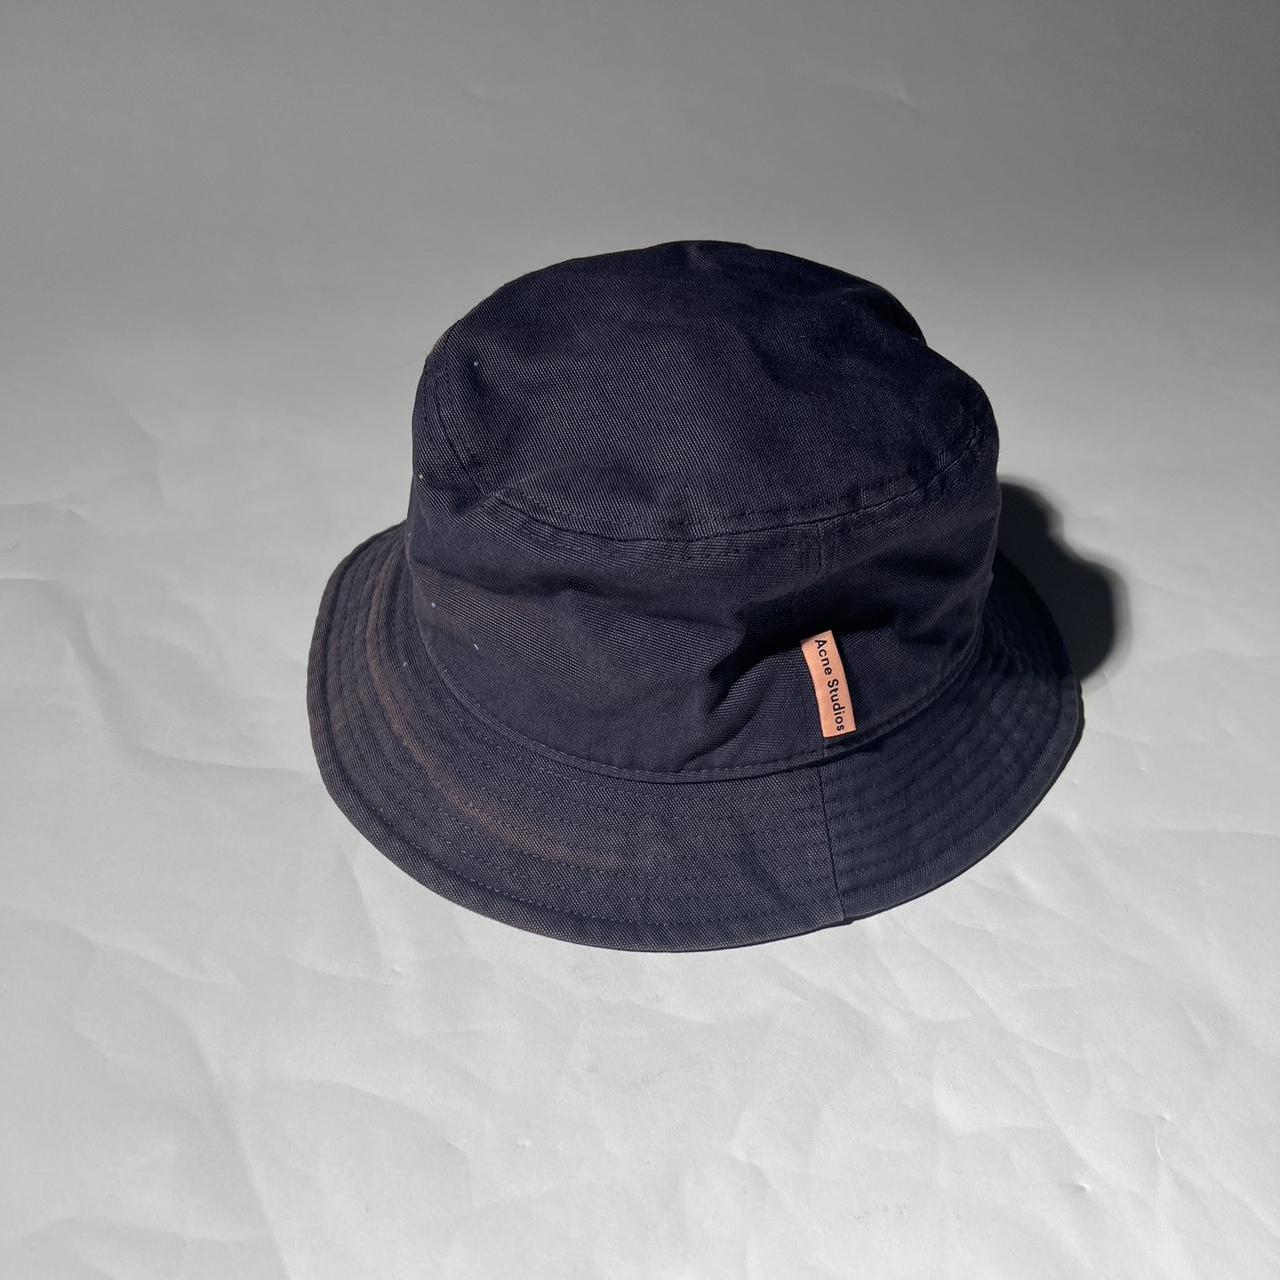 Acne Studios Men's Blue and Navy Hat - 1